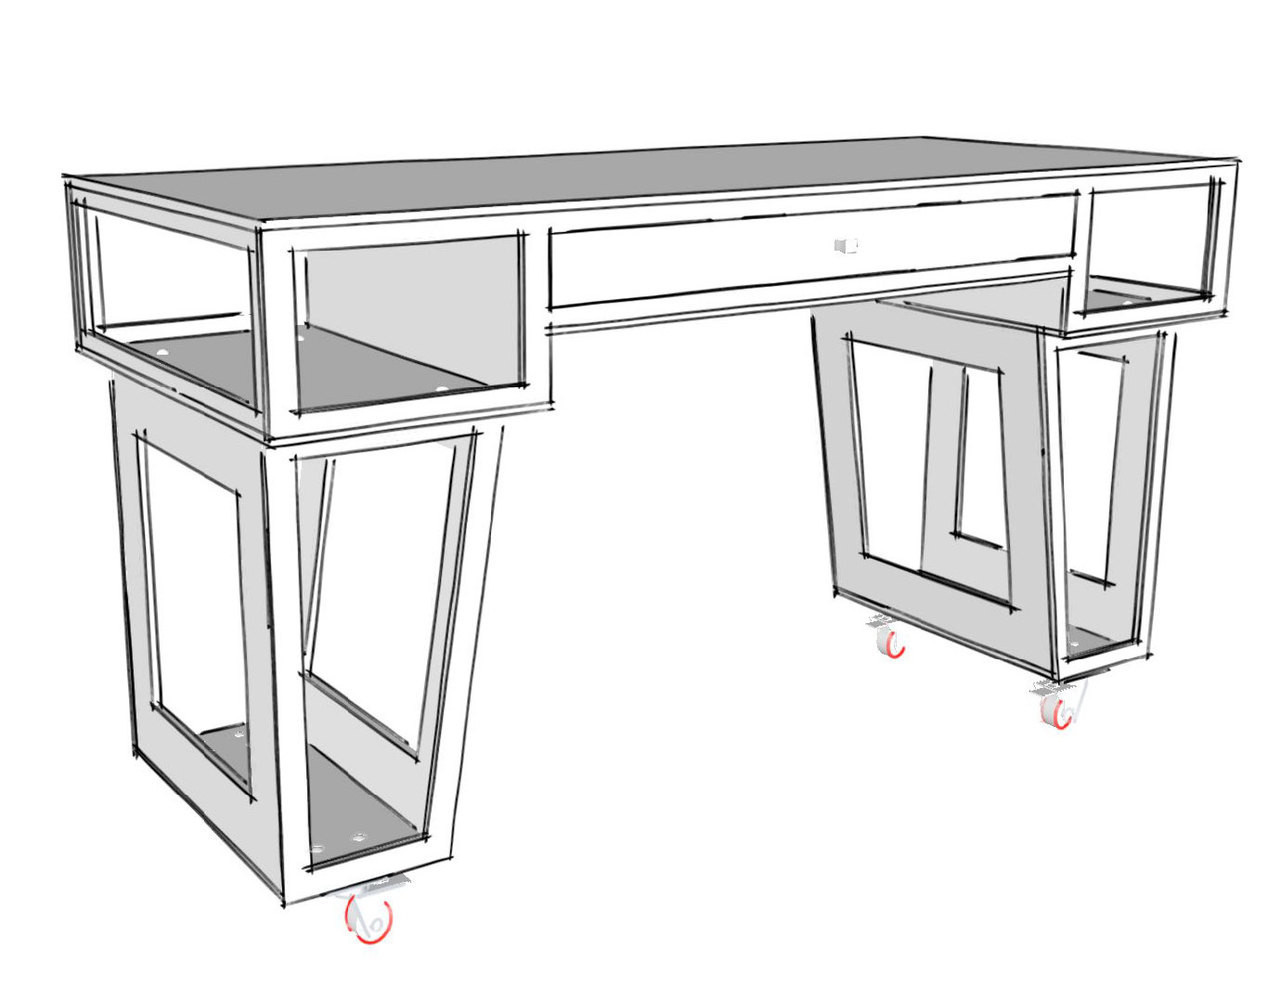 Paulk Standup Desk Extending The Best Of The Workbench Into The